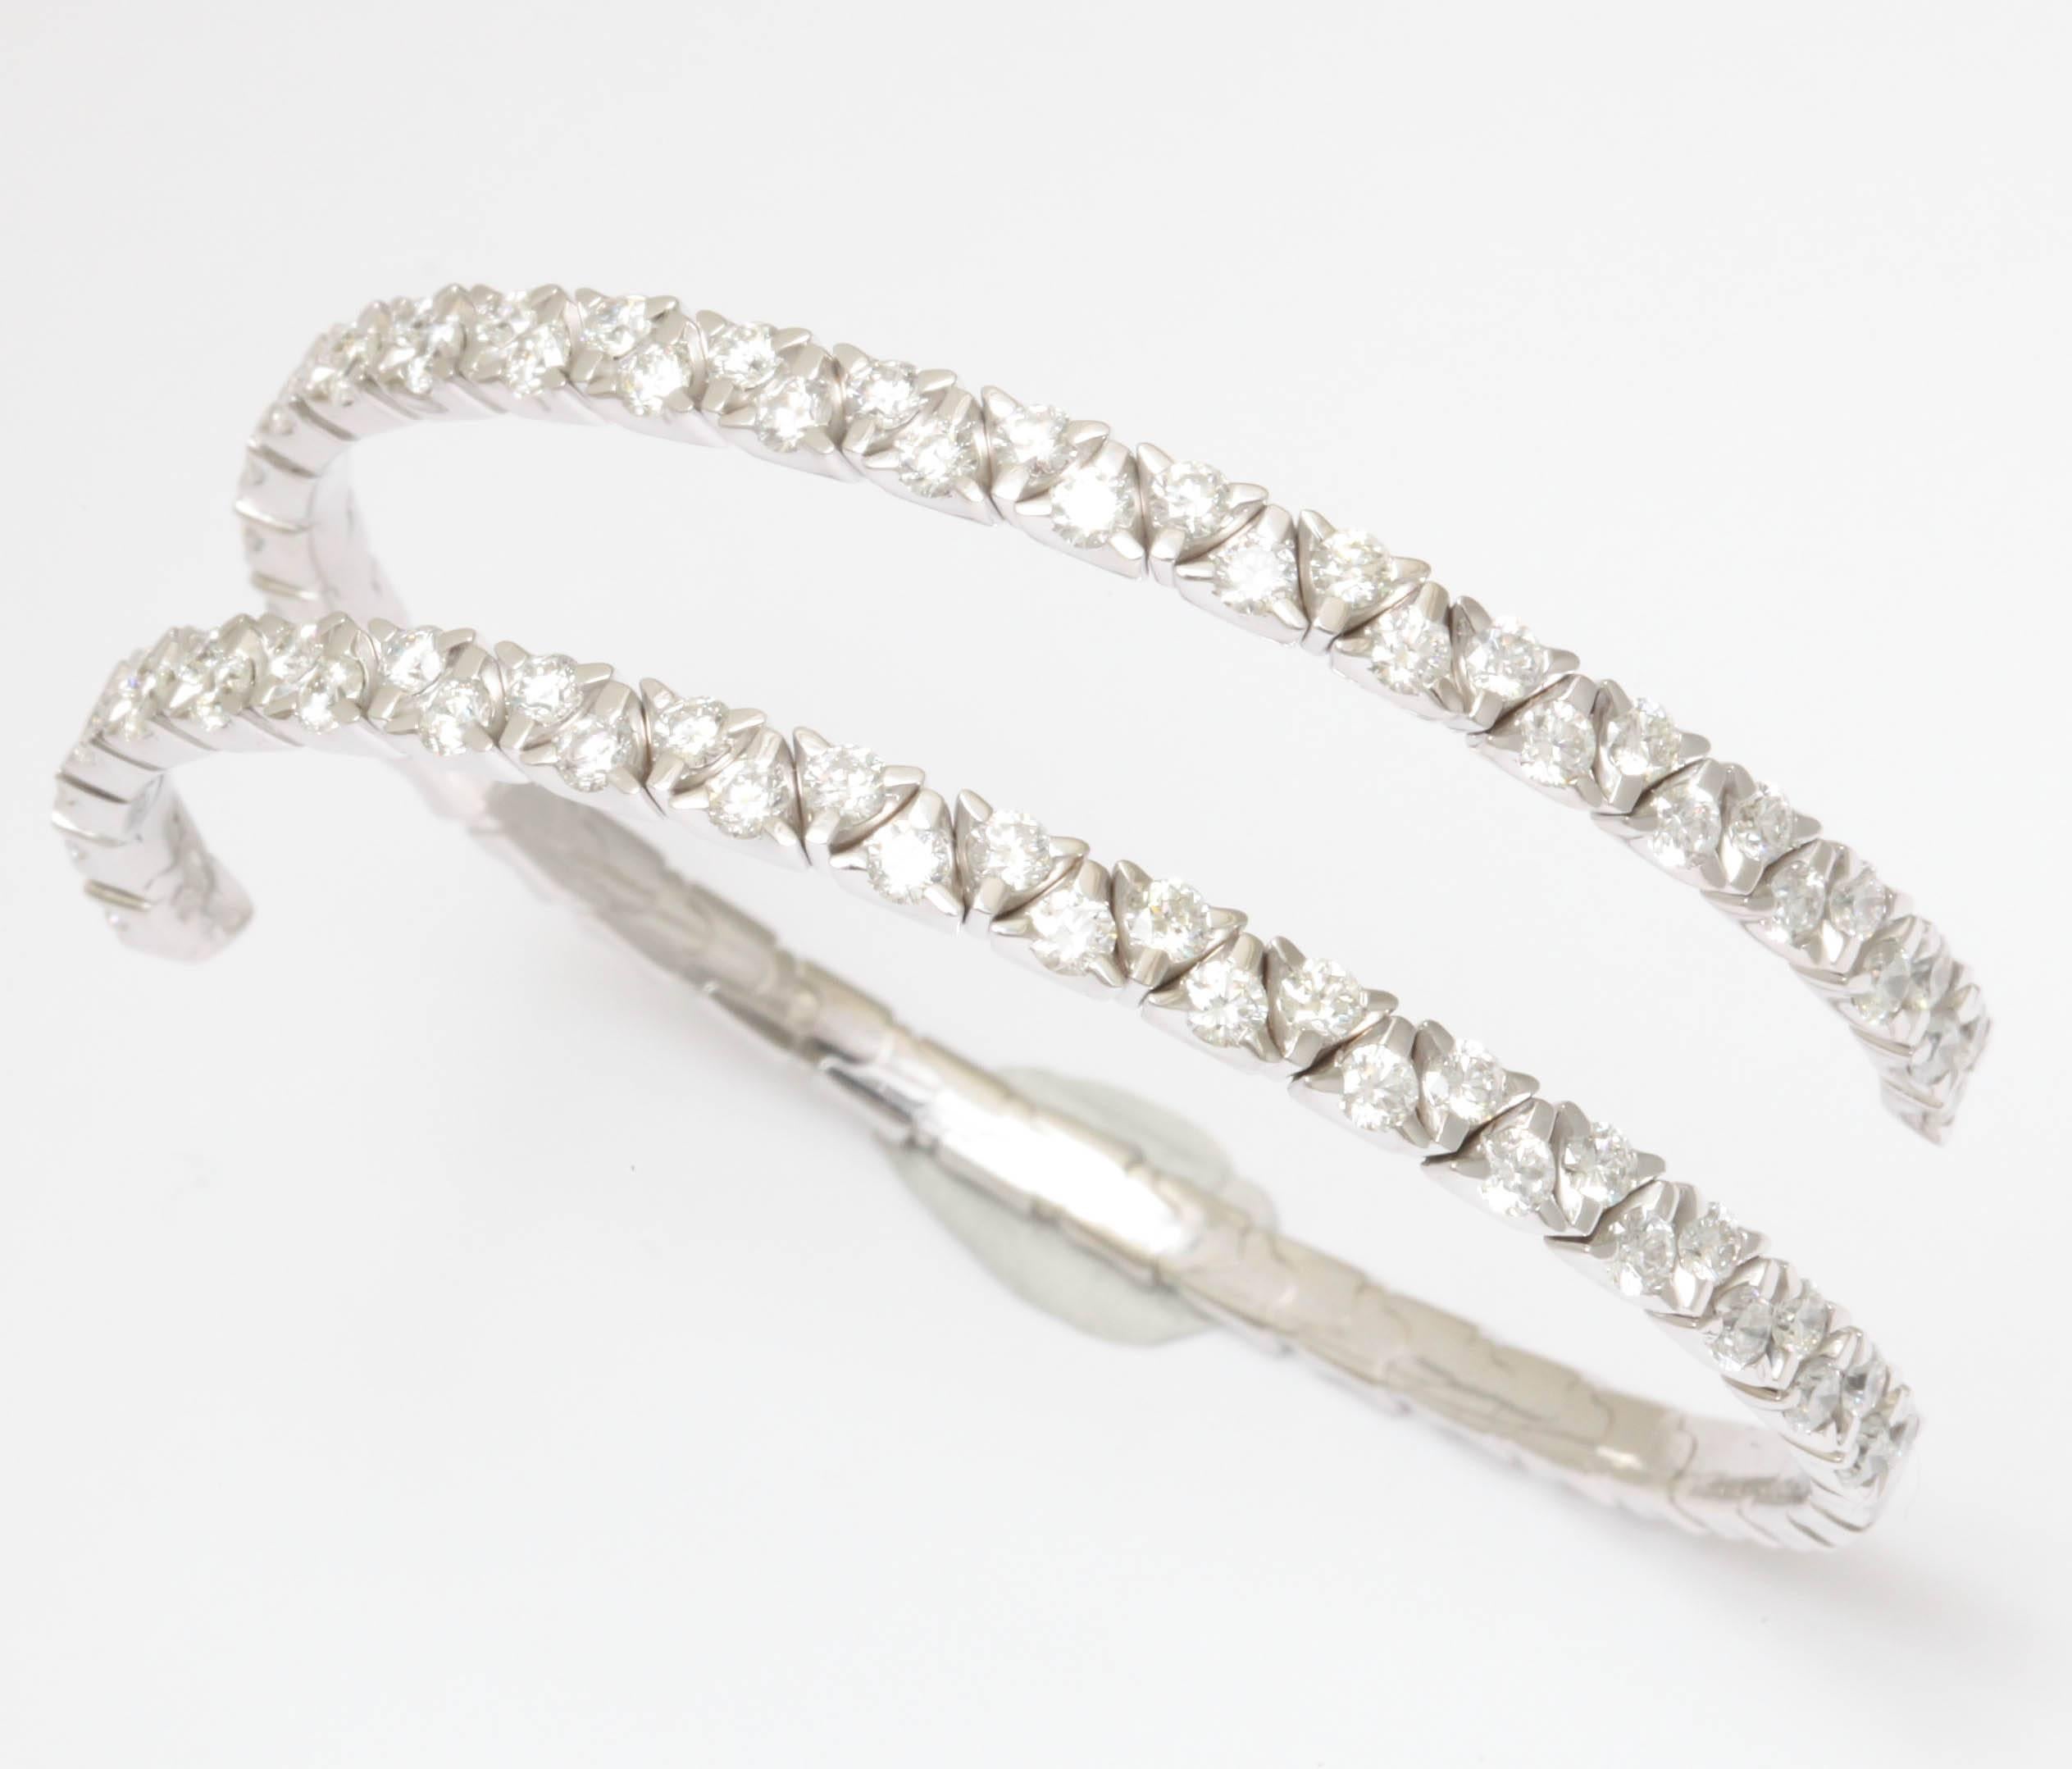 18k Spring loaded flexible coil bracelet
80 diamonds 5.00 carats